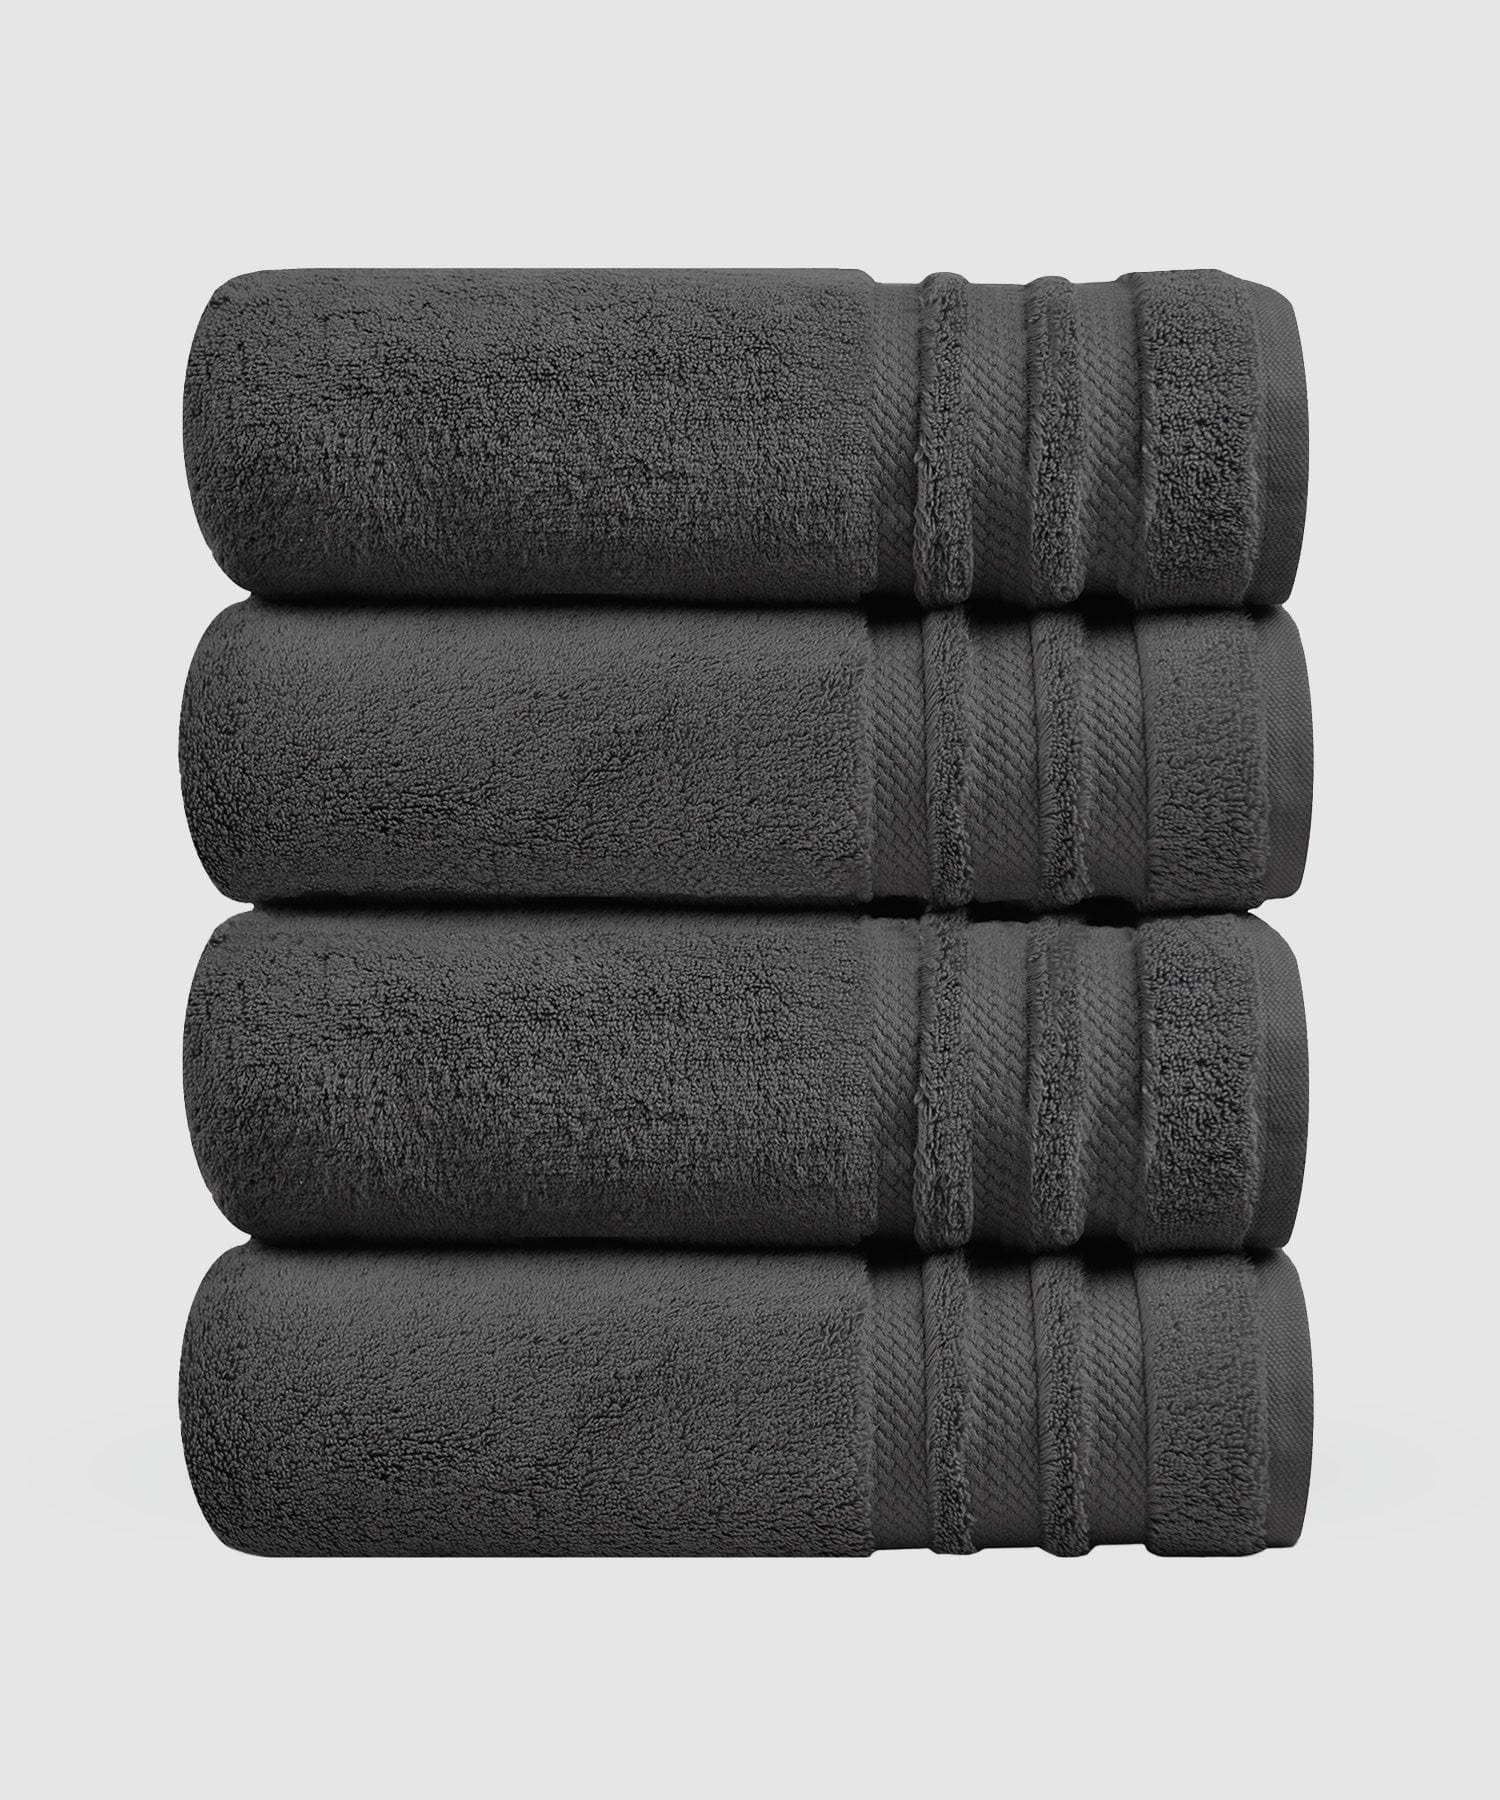 4 Pieces Bath Towels ₹4019/-